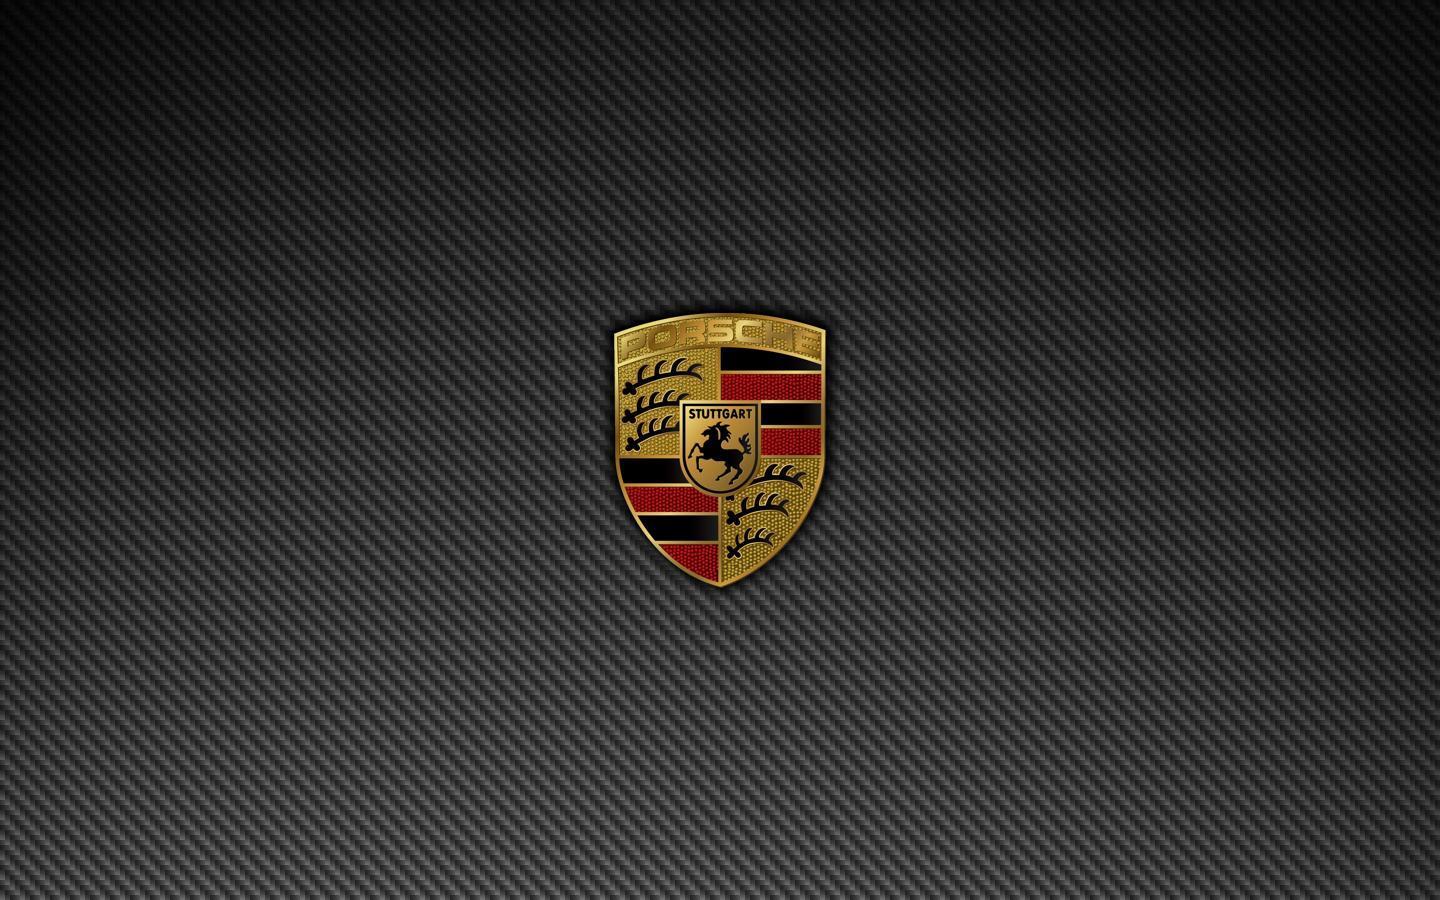 Porsche images PORSCHE LOGO HD wallpaper and background